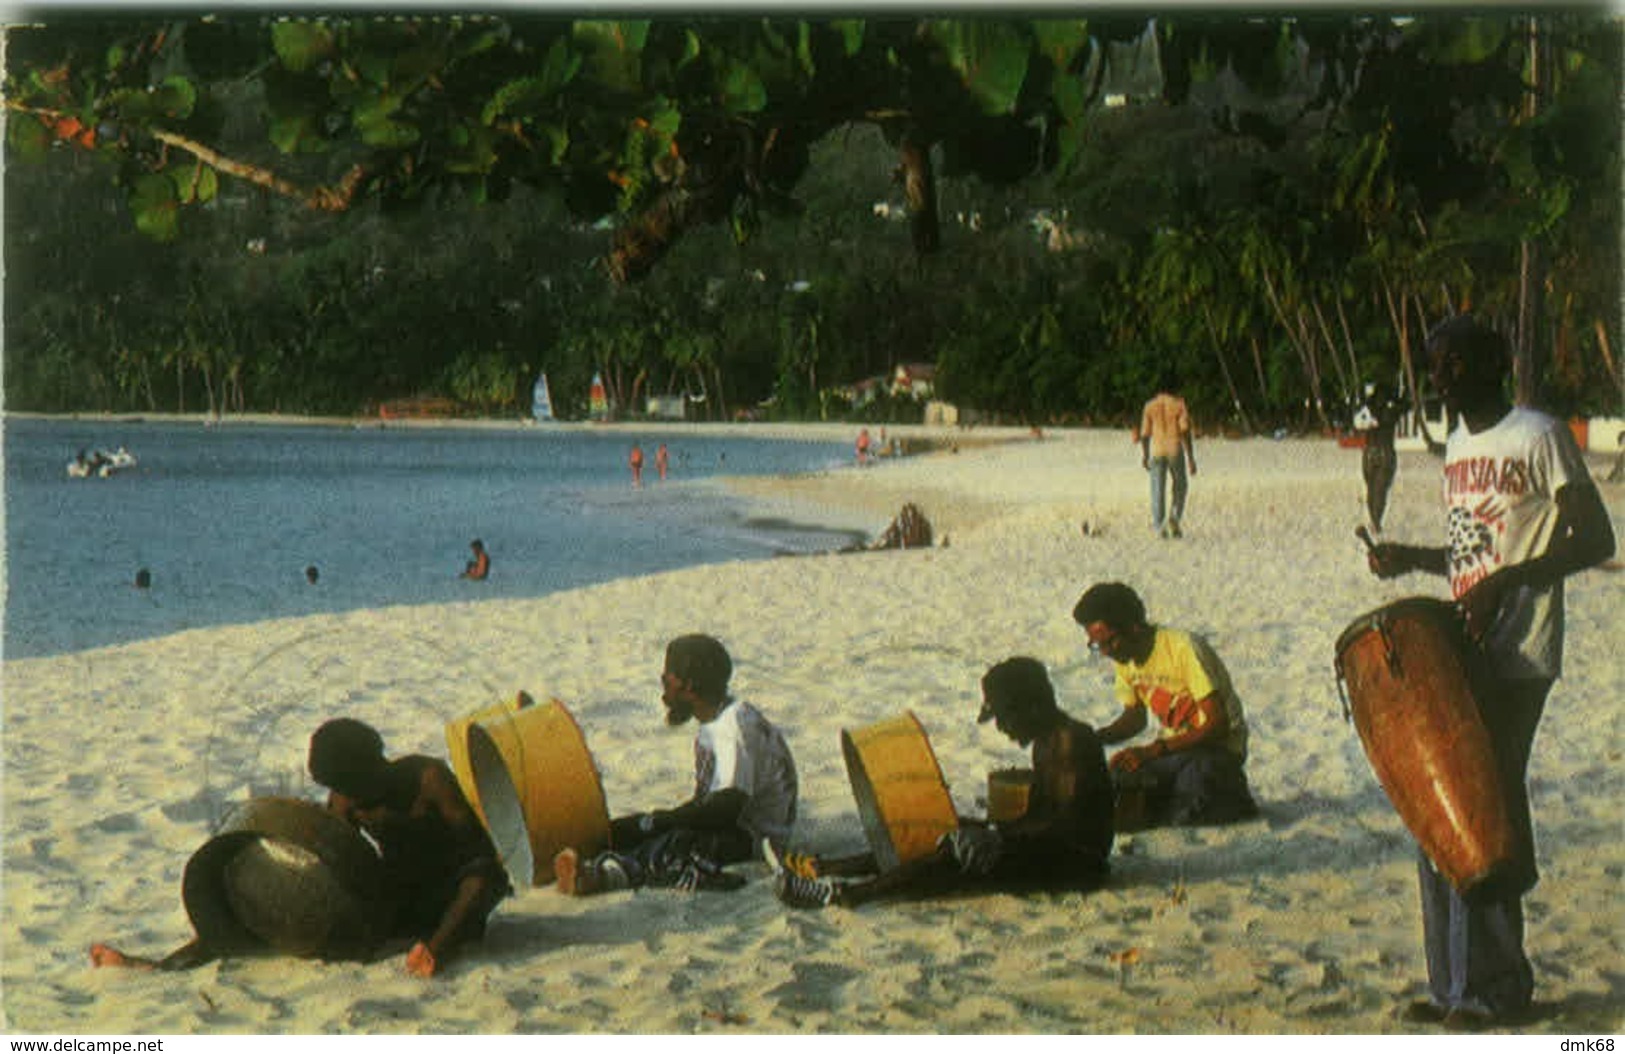 GRENADA - LOCAL MUSICIANS ENTERTAIN VISITORS AT GRAND ANSE BEACH - STAMP - 1960s (BG6017) - Grenada